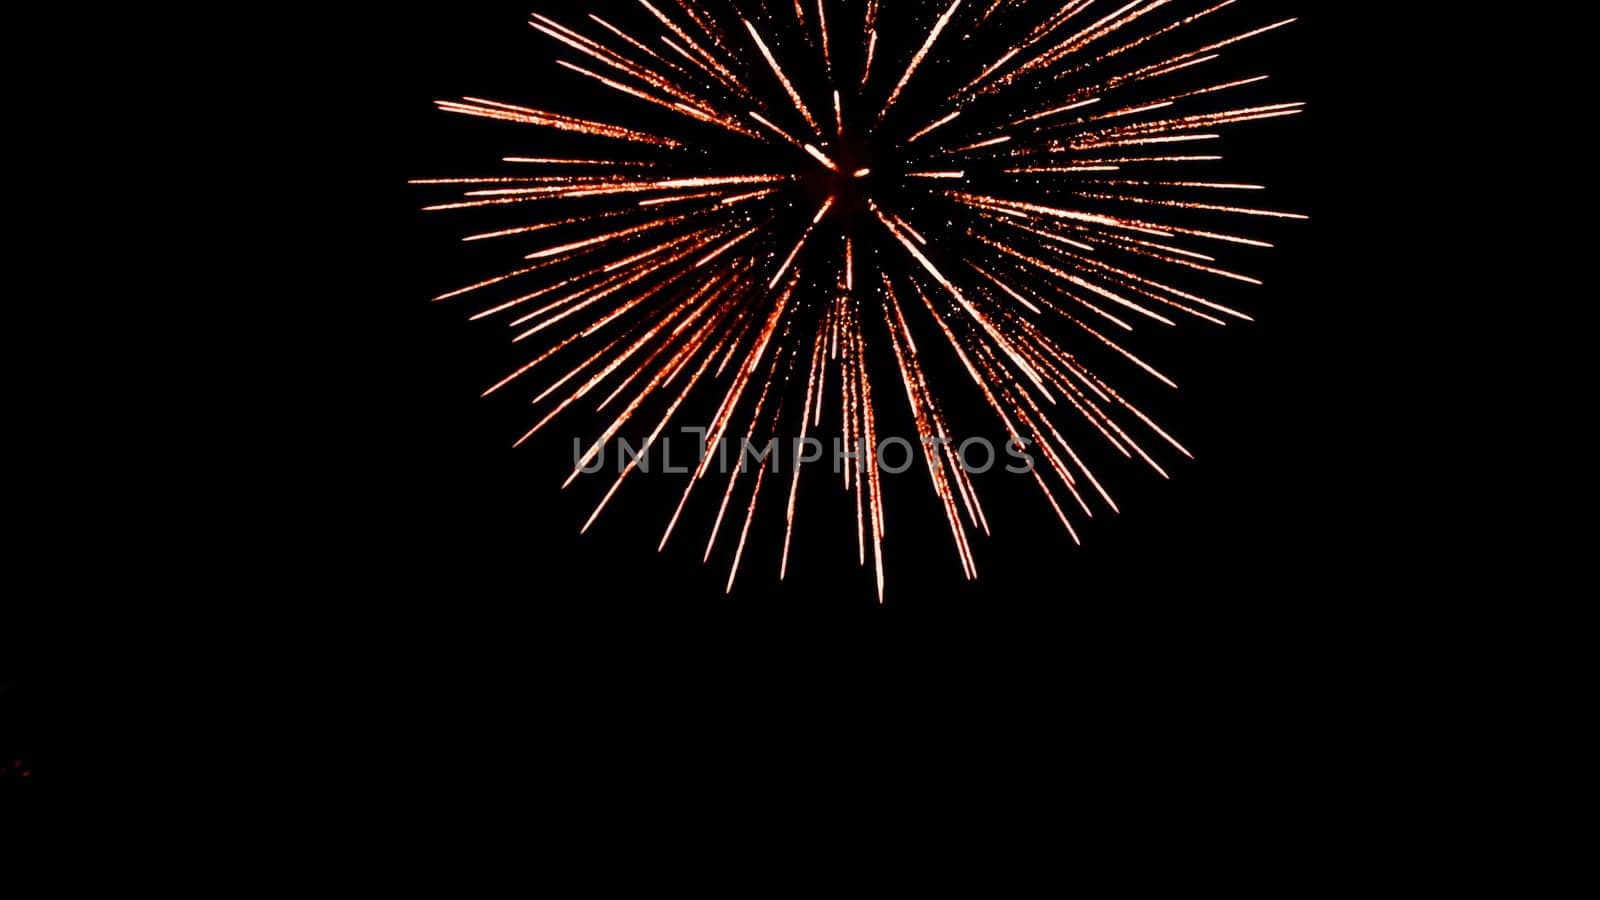 Radiant firework burst in night sky by Peruphotoart